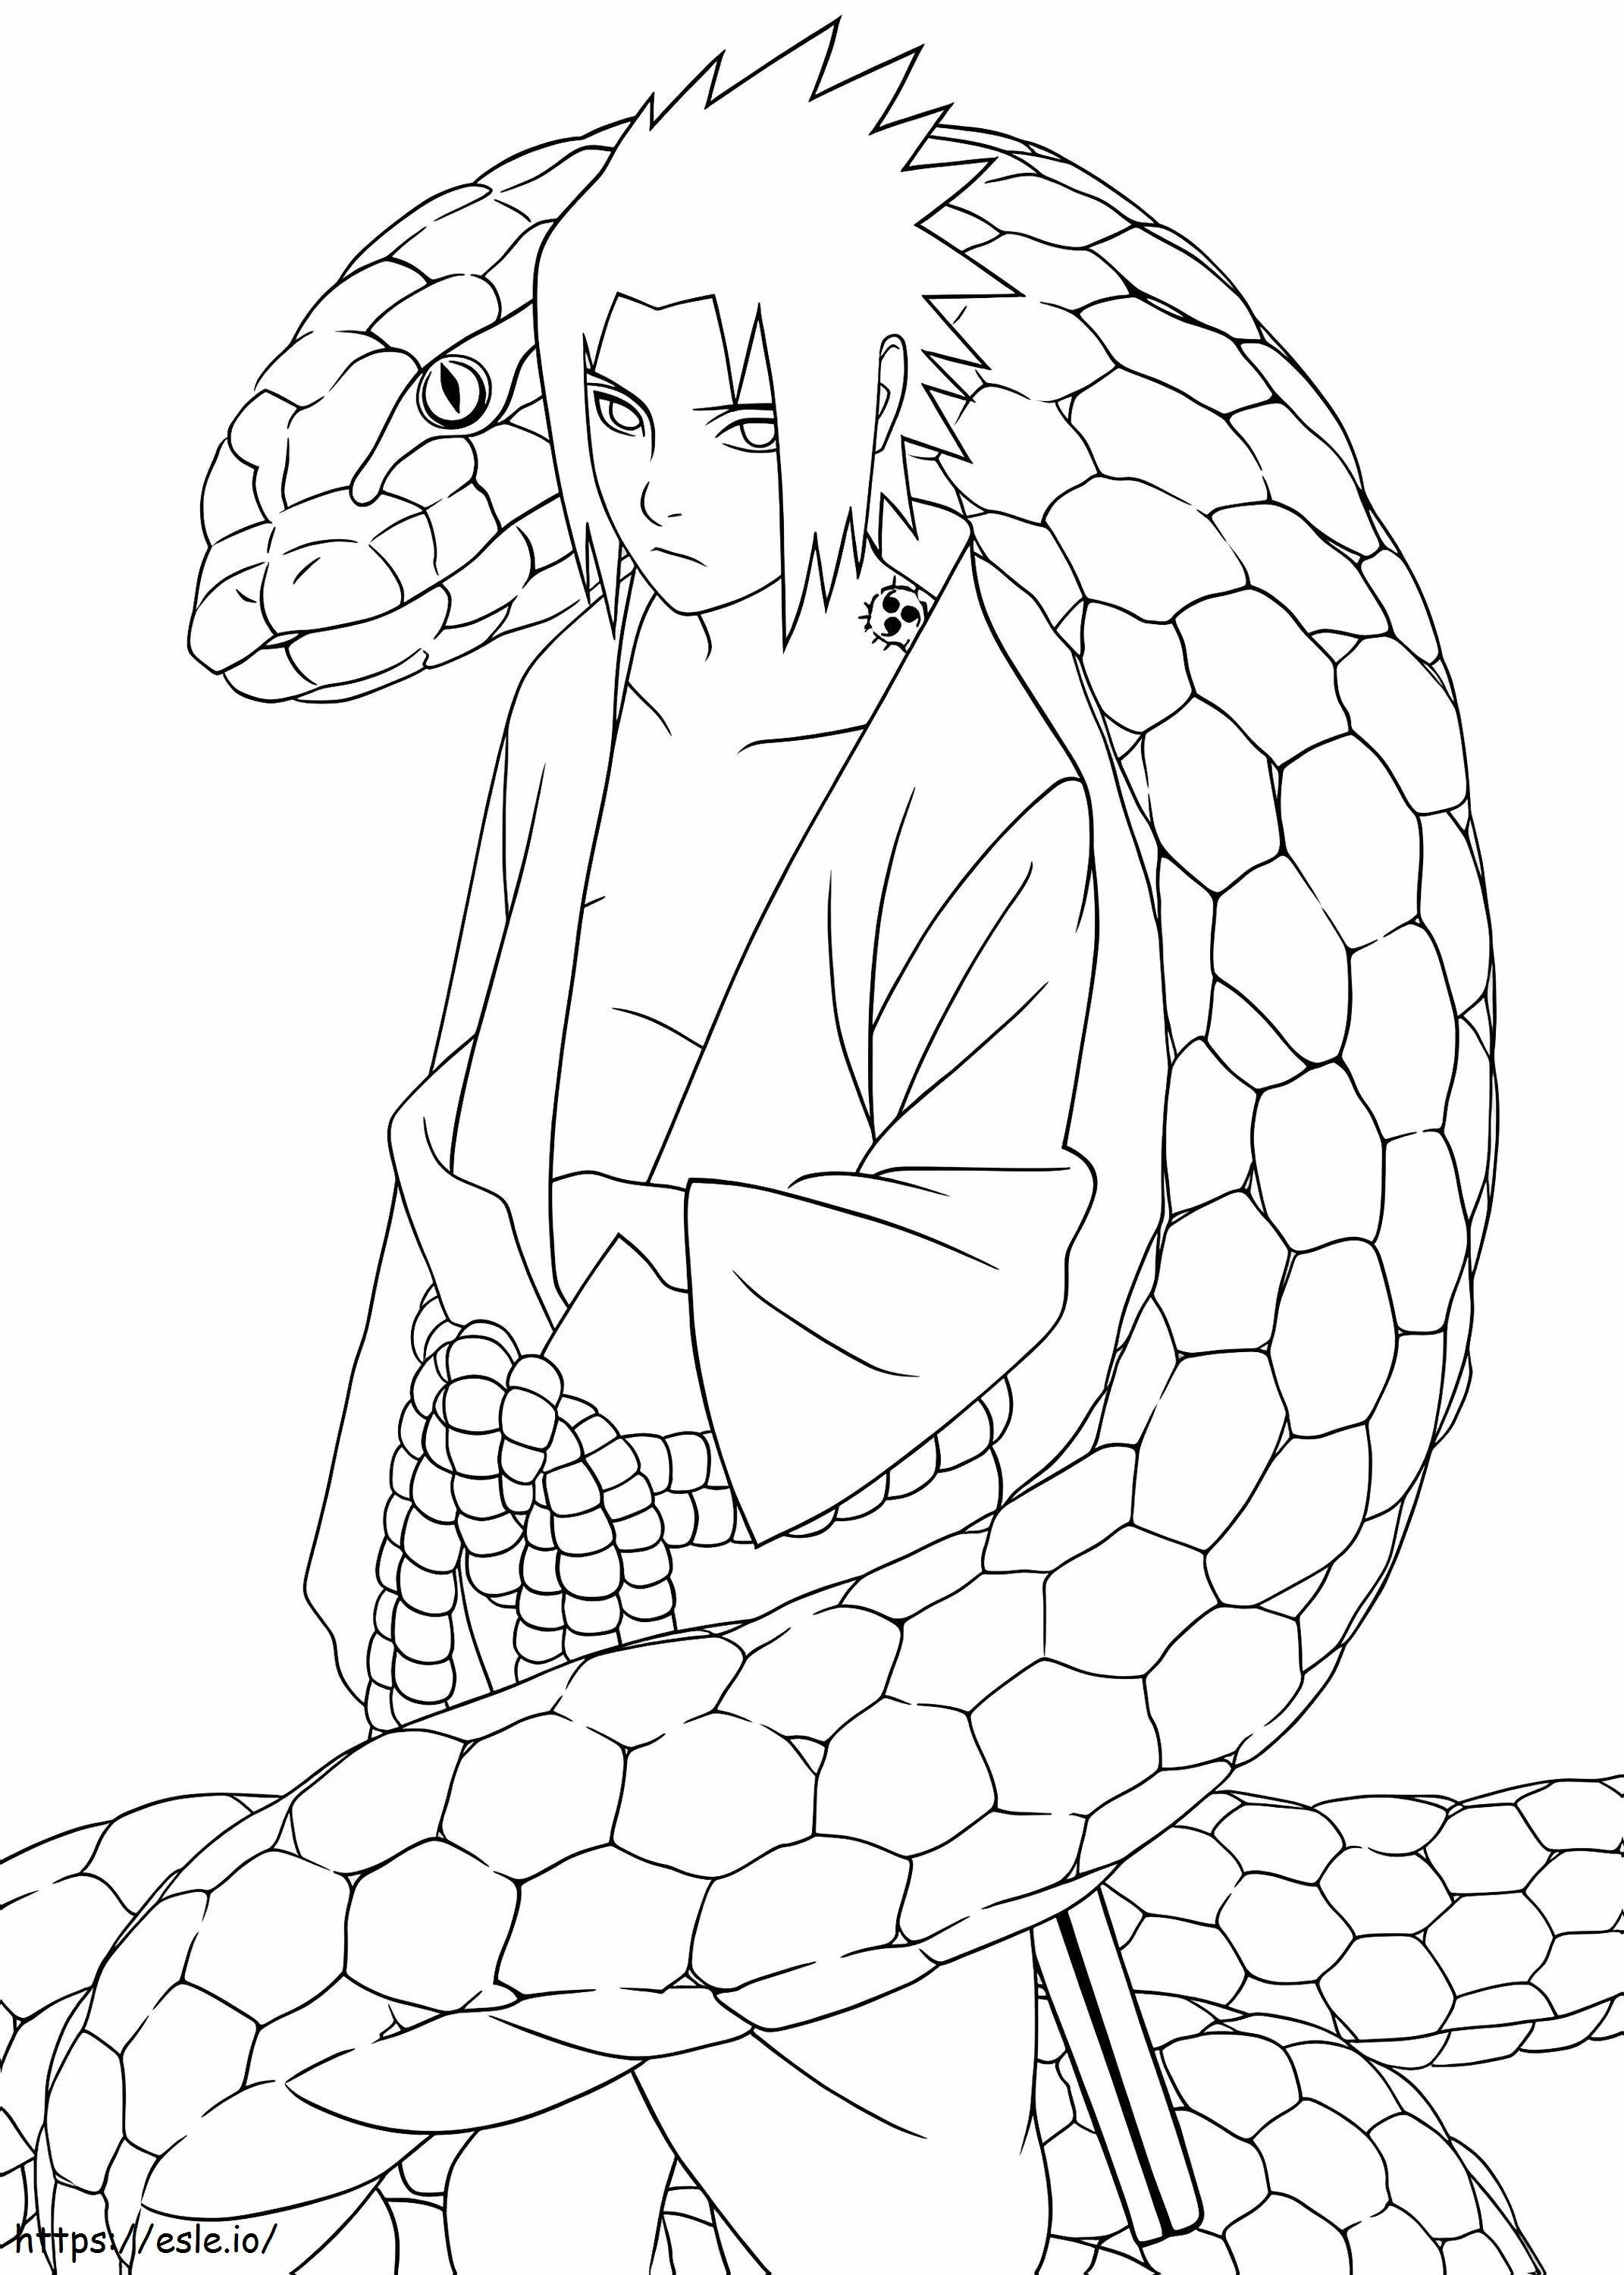 1561020452 Sasuke And Aoda A4 coloring page